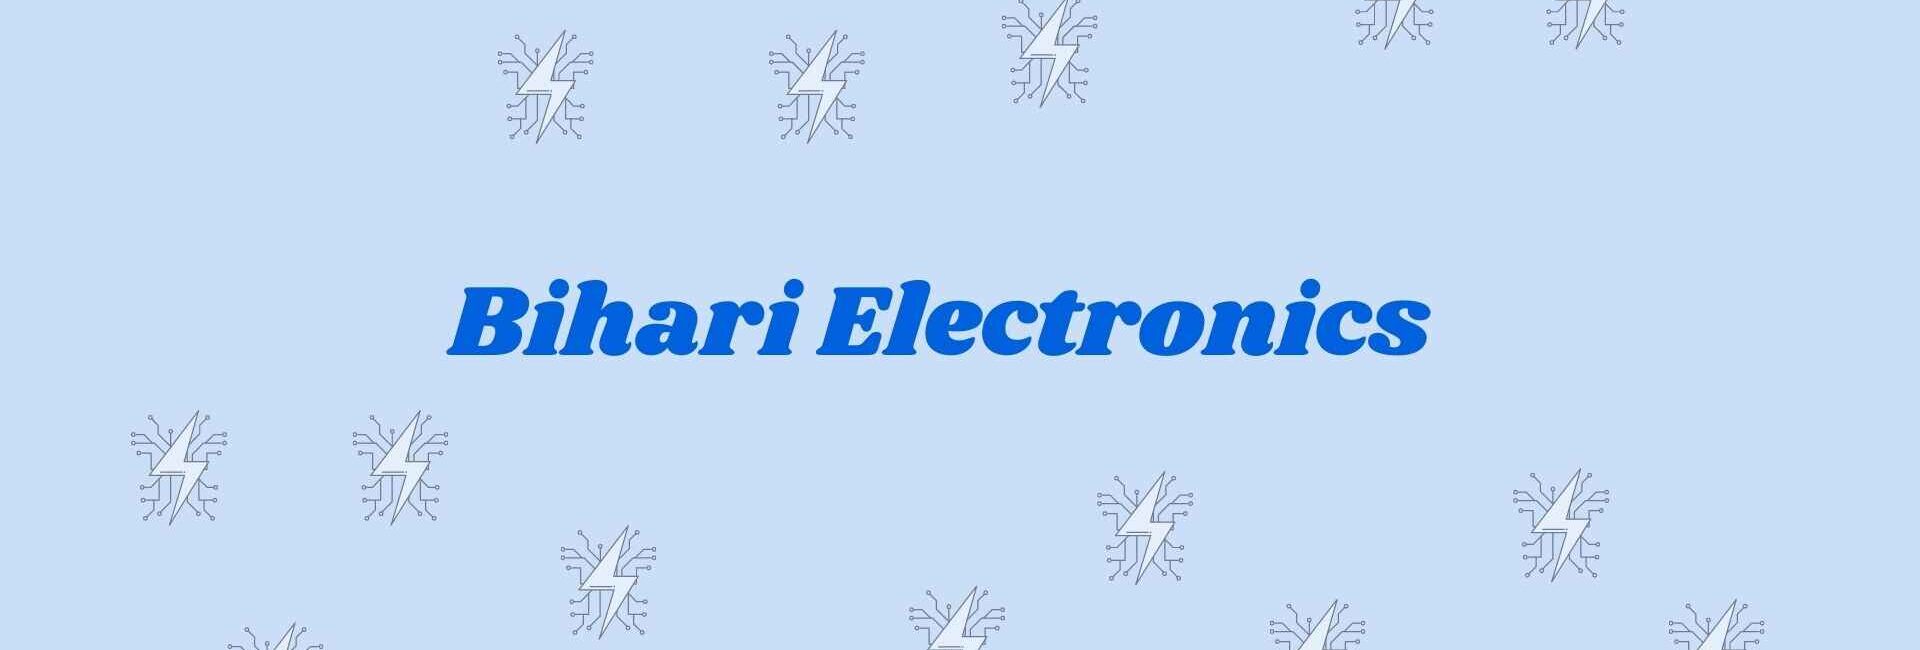 Bihari Electronics - Electronics Goods Dealer in Noida